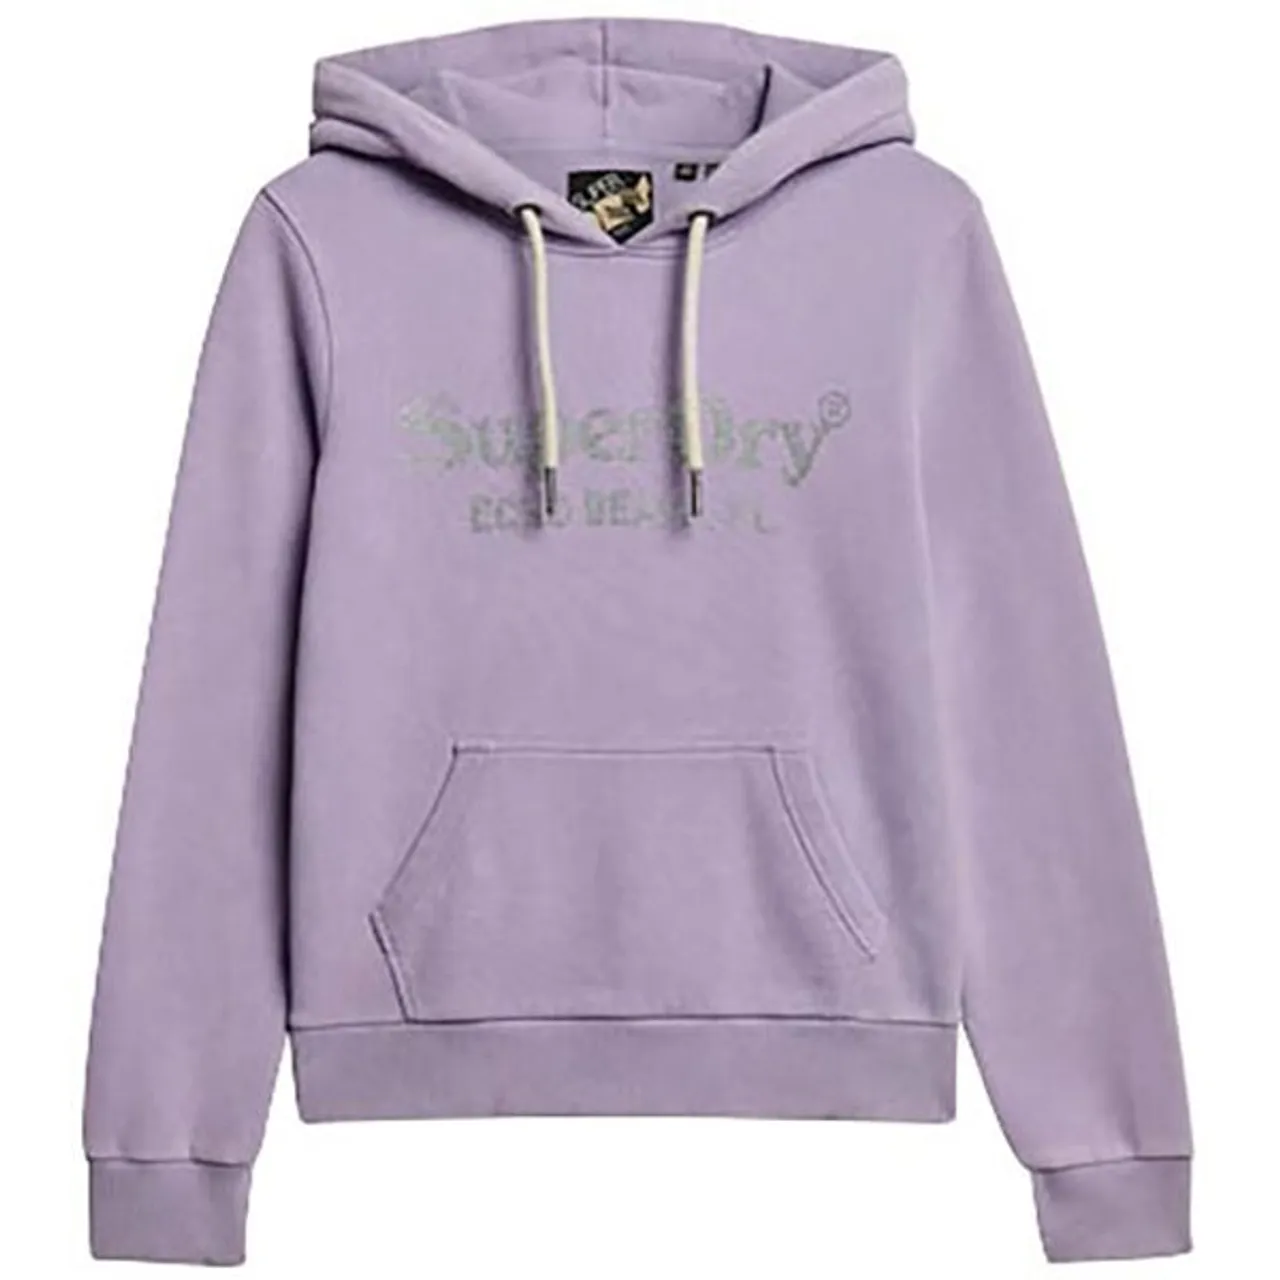 Kapuzensweatshirt SUPERDRY "METALLIC VENUE LOGO HOODIE" Gr. XL, lila (light lavender purple) Damen Sweatshirts